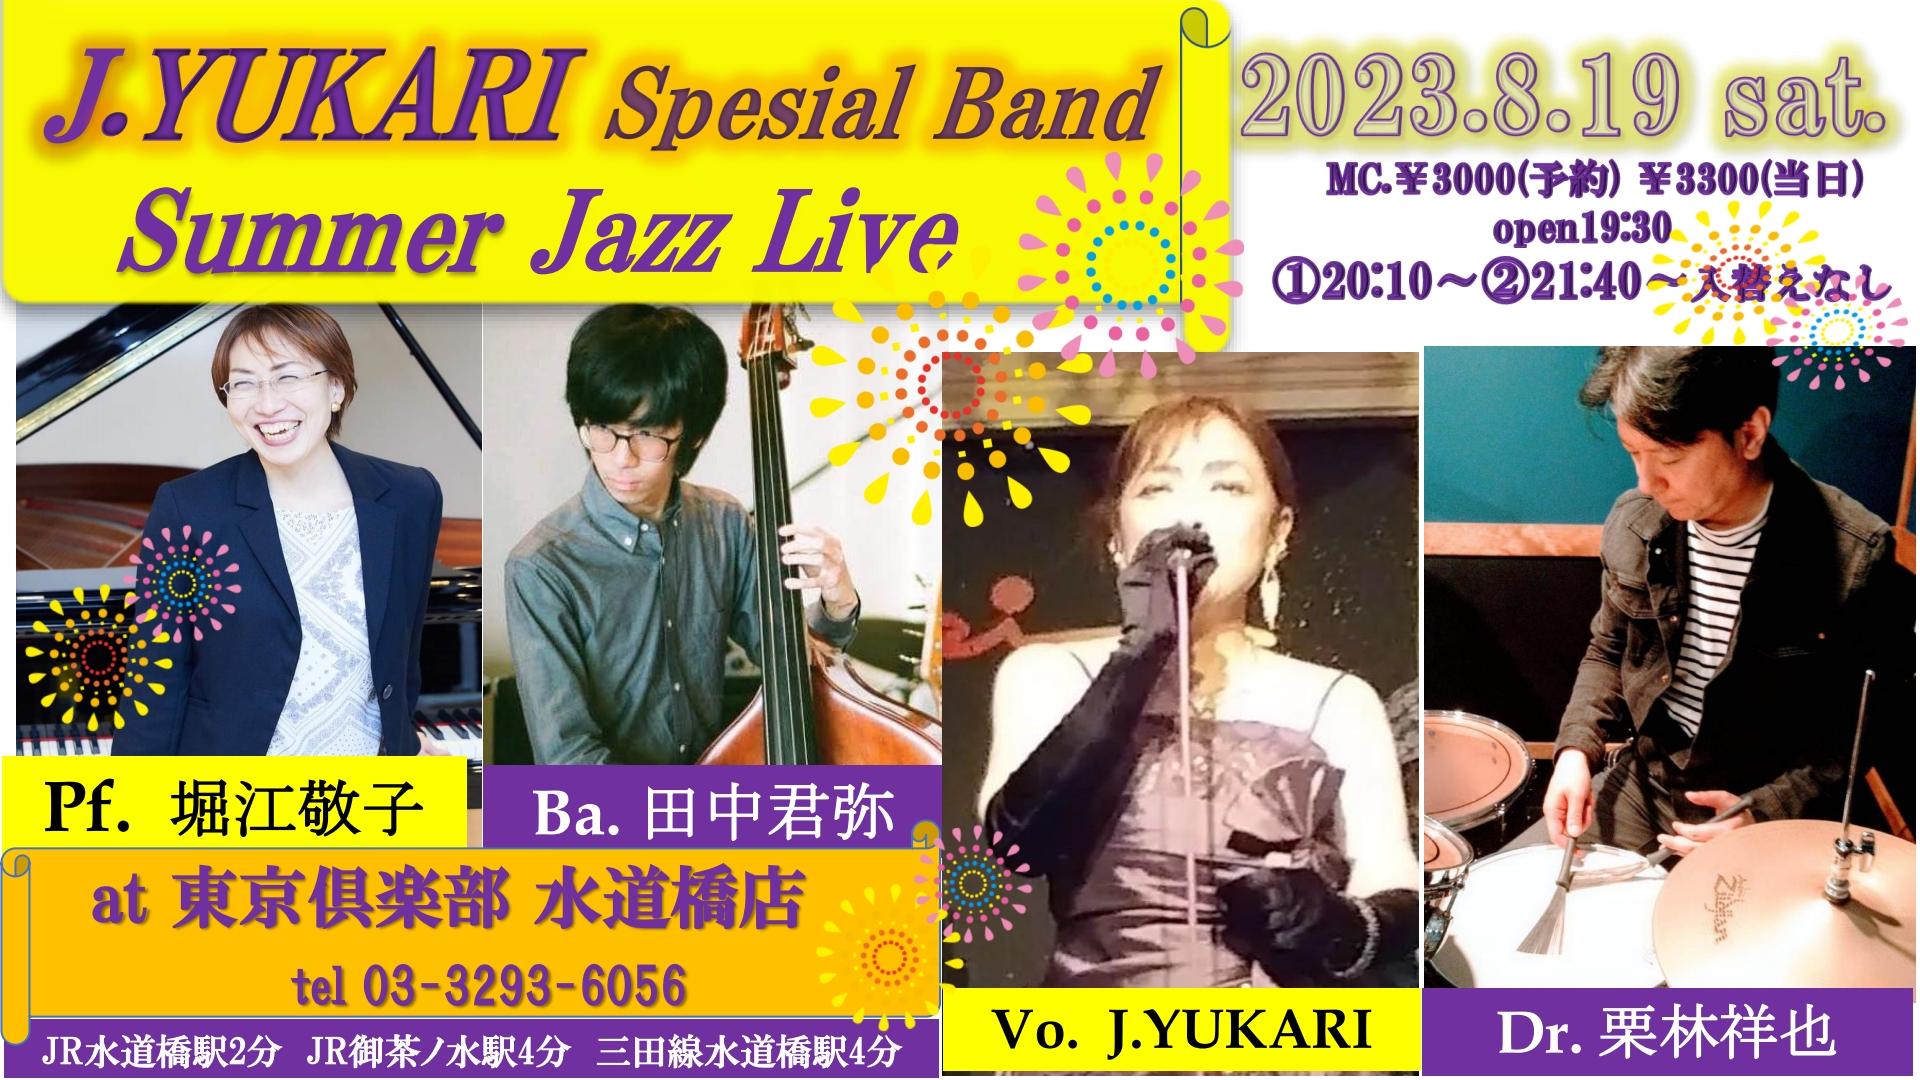 J.YUKARI Special Band